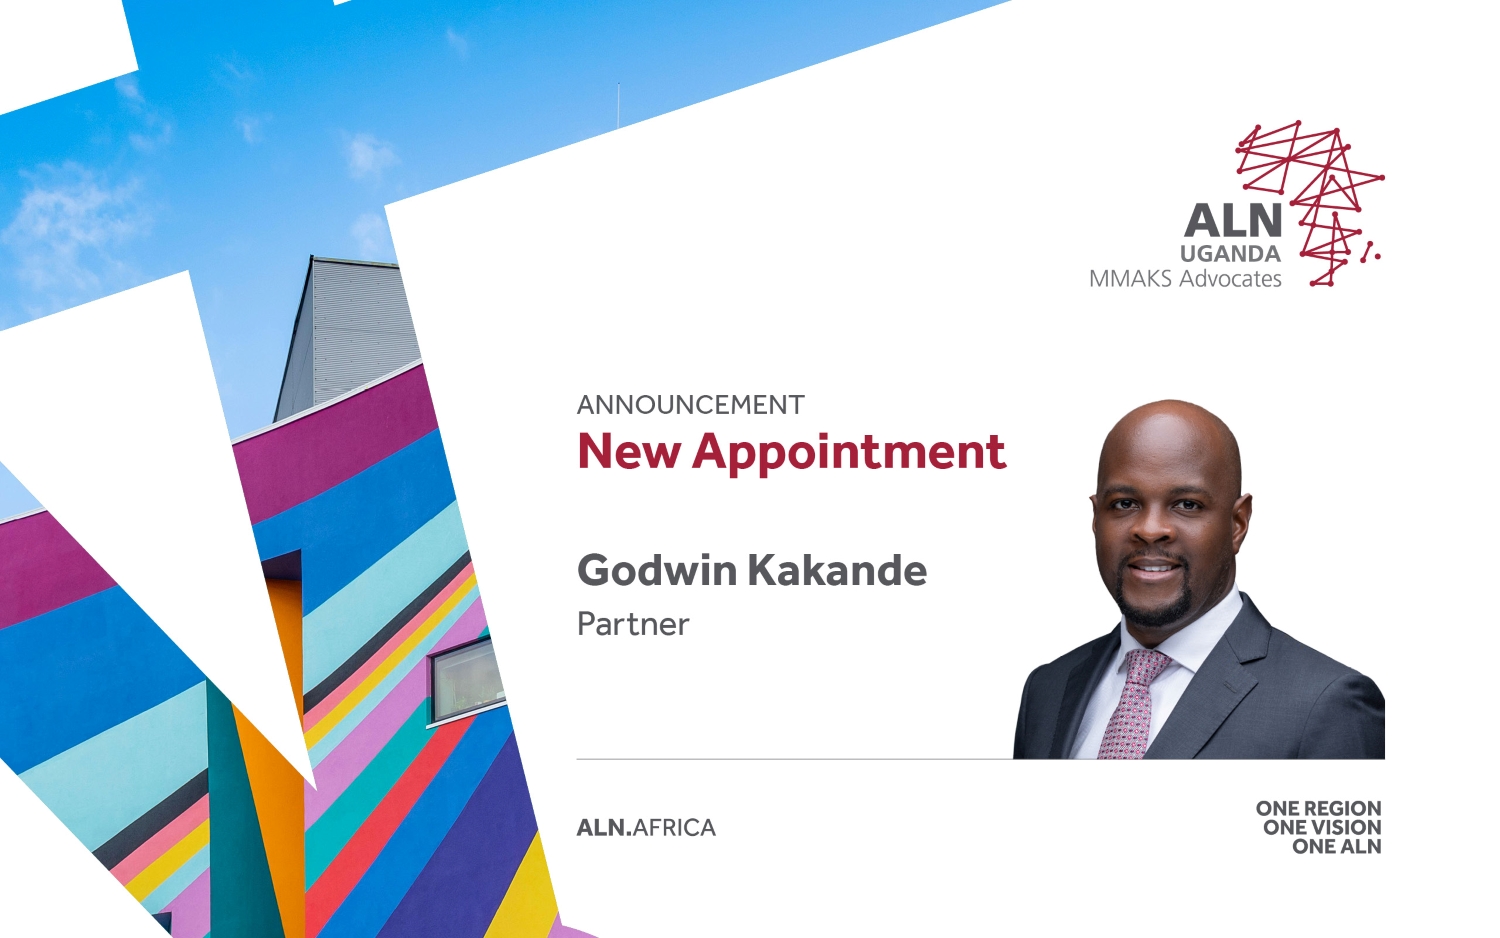 ALN Uganda Strengthens Corporate Expertise with New Partner Godwin Kakande